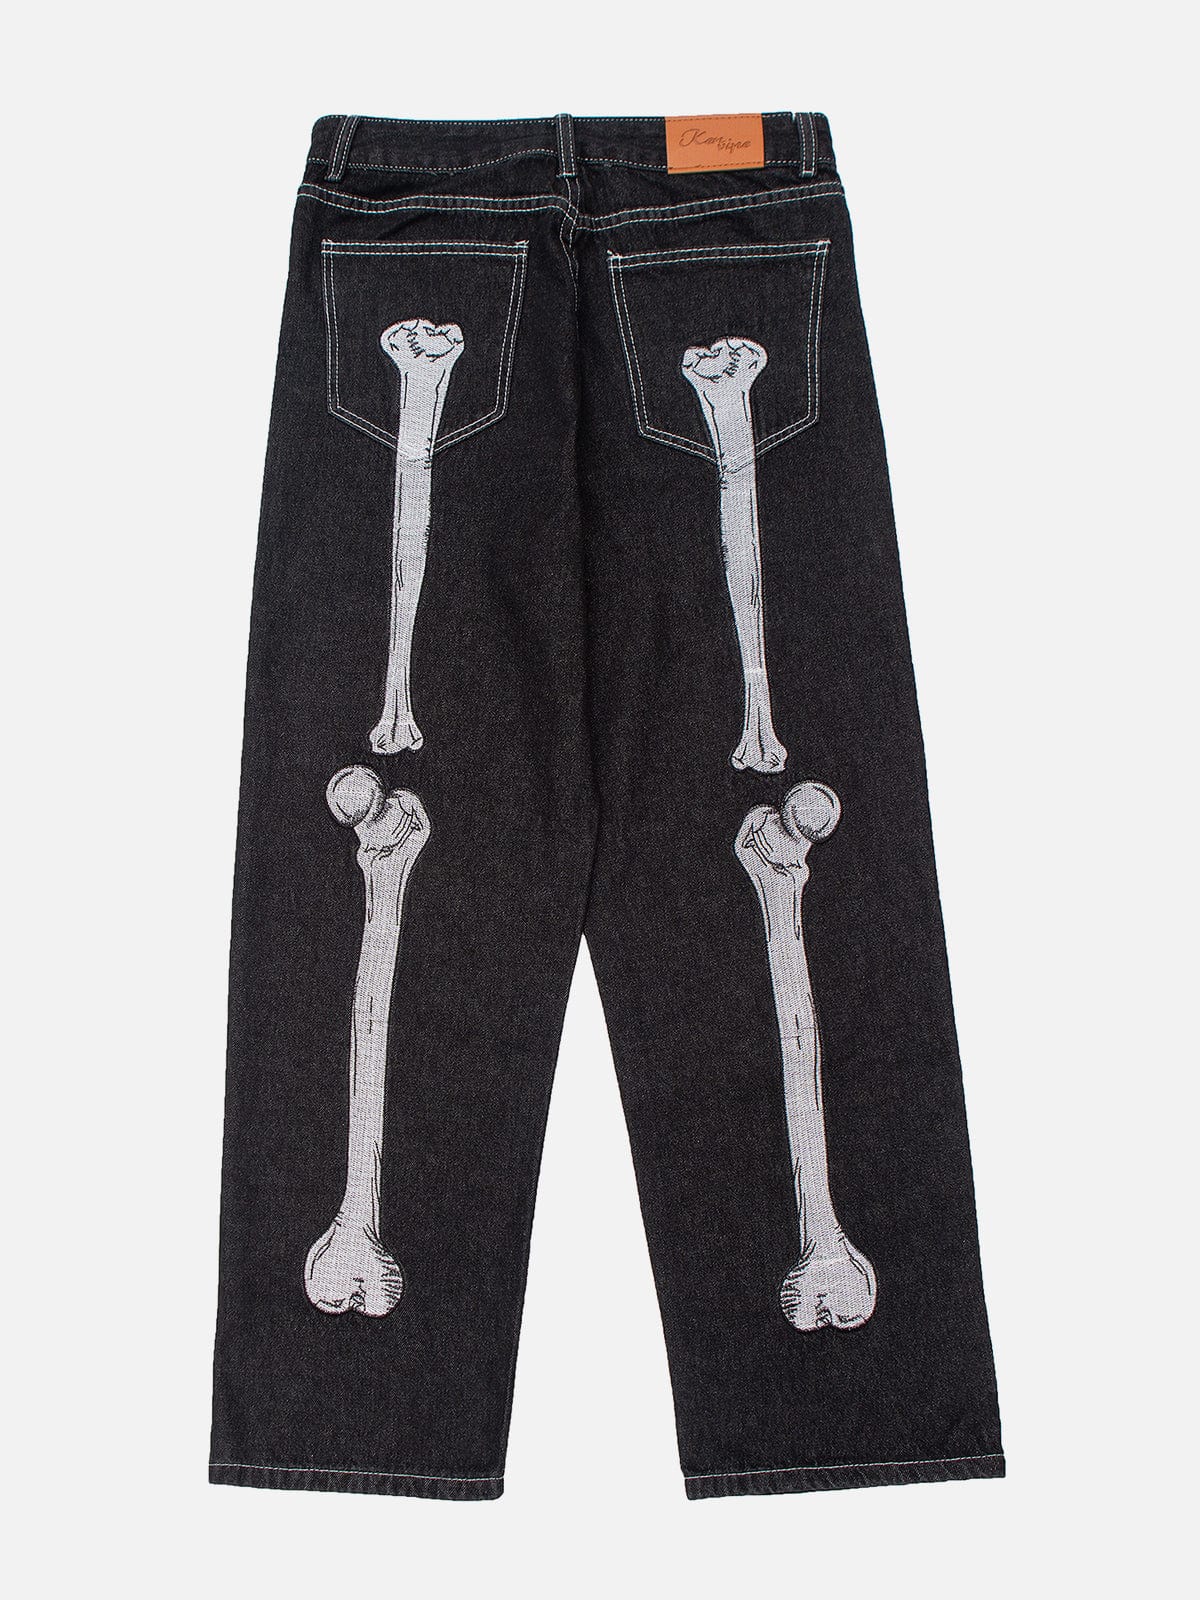 NEV Vintage Skull Bone Embroidery Jeans